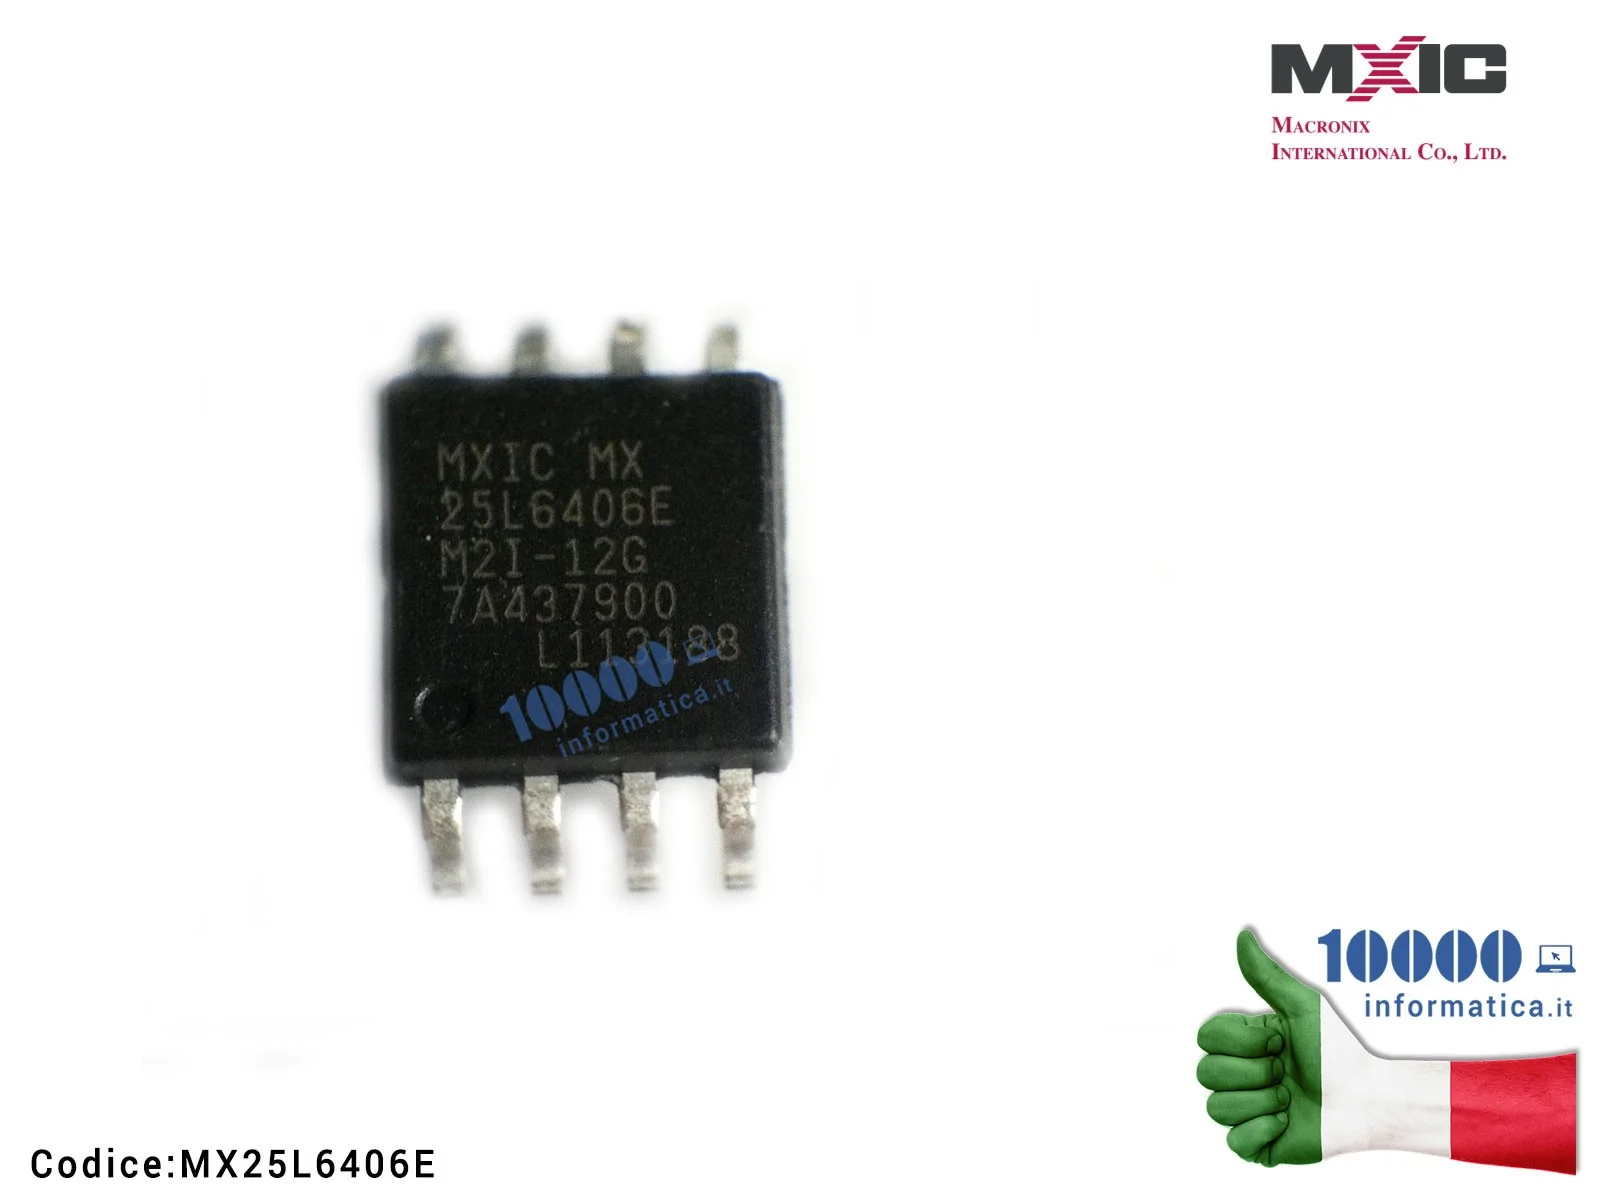 MX25L6406E IC Chip MACRONIX MXIC MX MX25L6406E MX25L6406EM2I M2I-12G 64M-Bit CMOS SERIAL SPI FLASH SOP8 SOIC 8